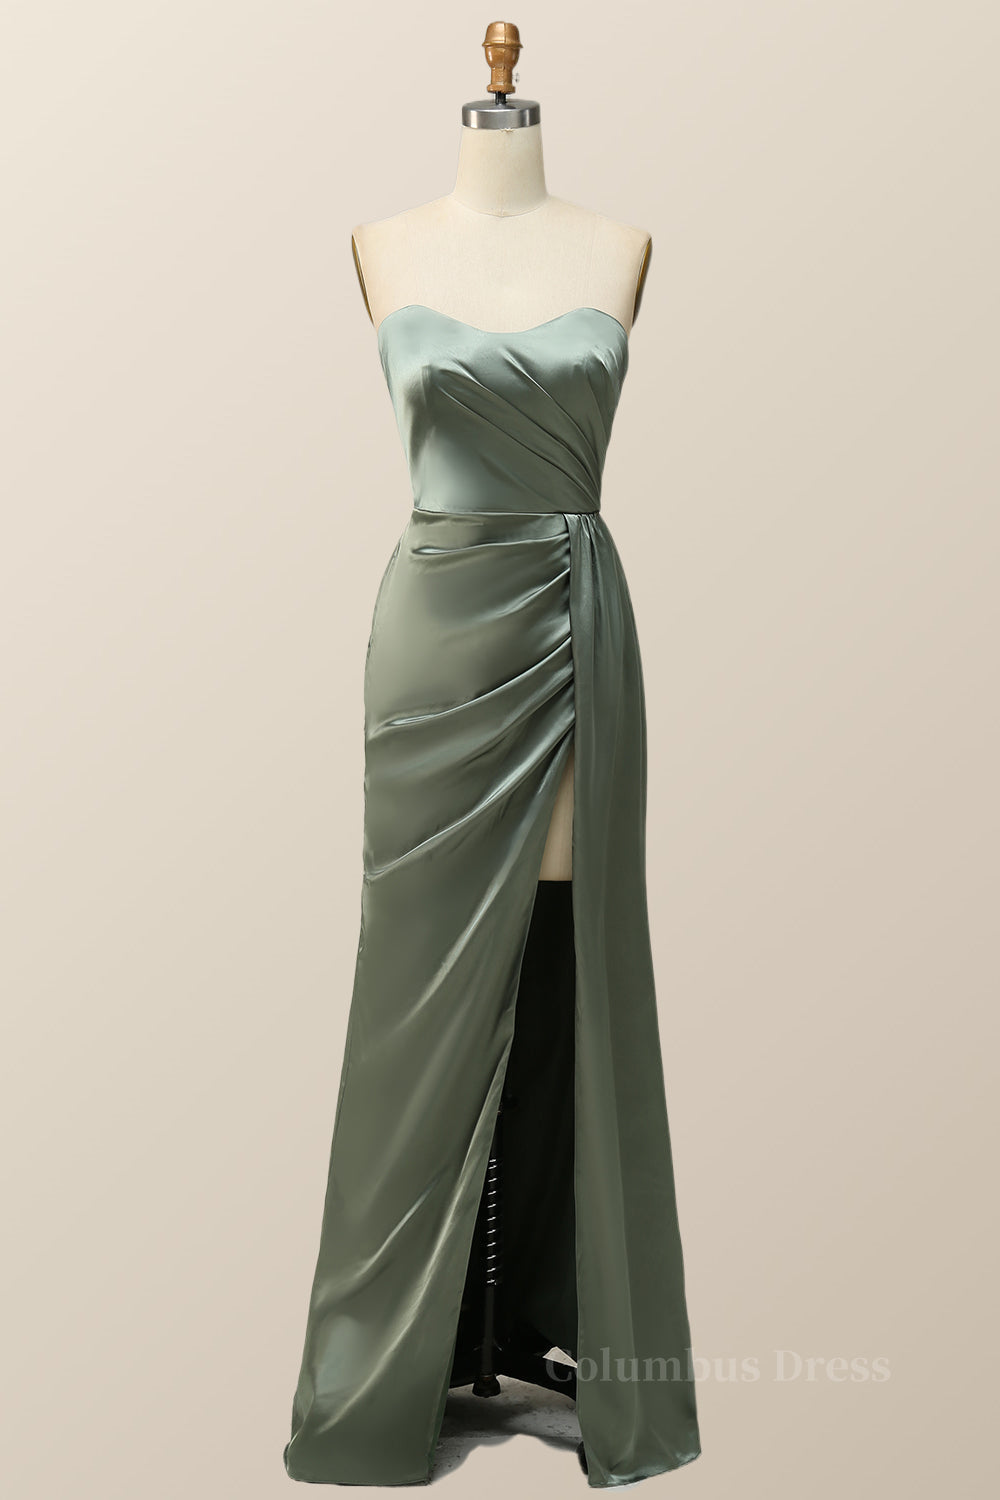 Moss Green Satin Strapless Long Corset Bridesmaid Dress outfit, Party Dress